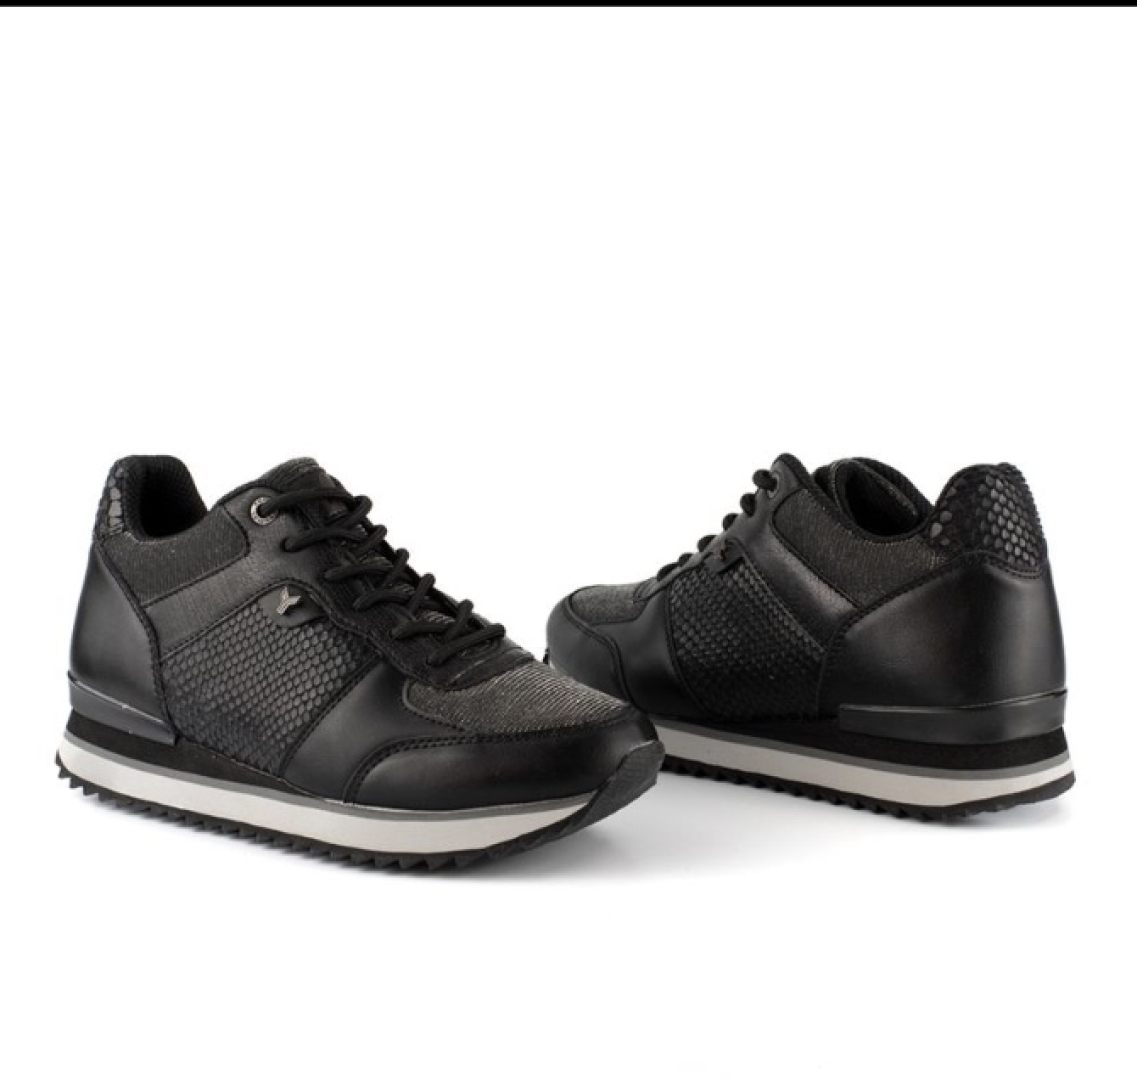 Sneaker de Yumas en color negro. D-233